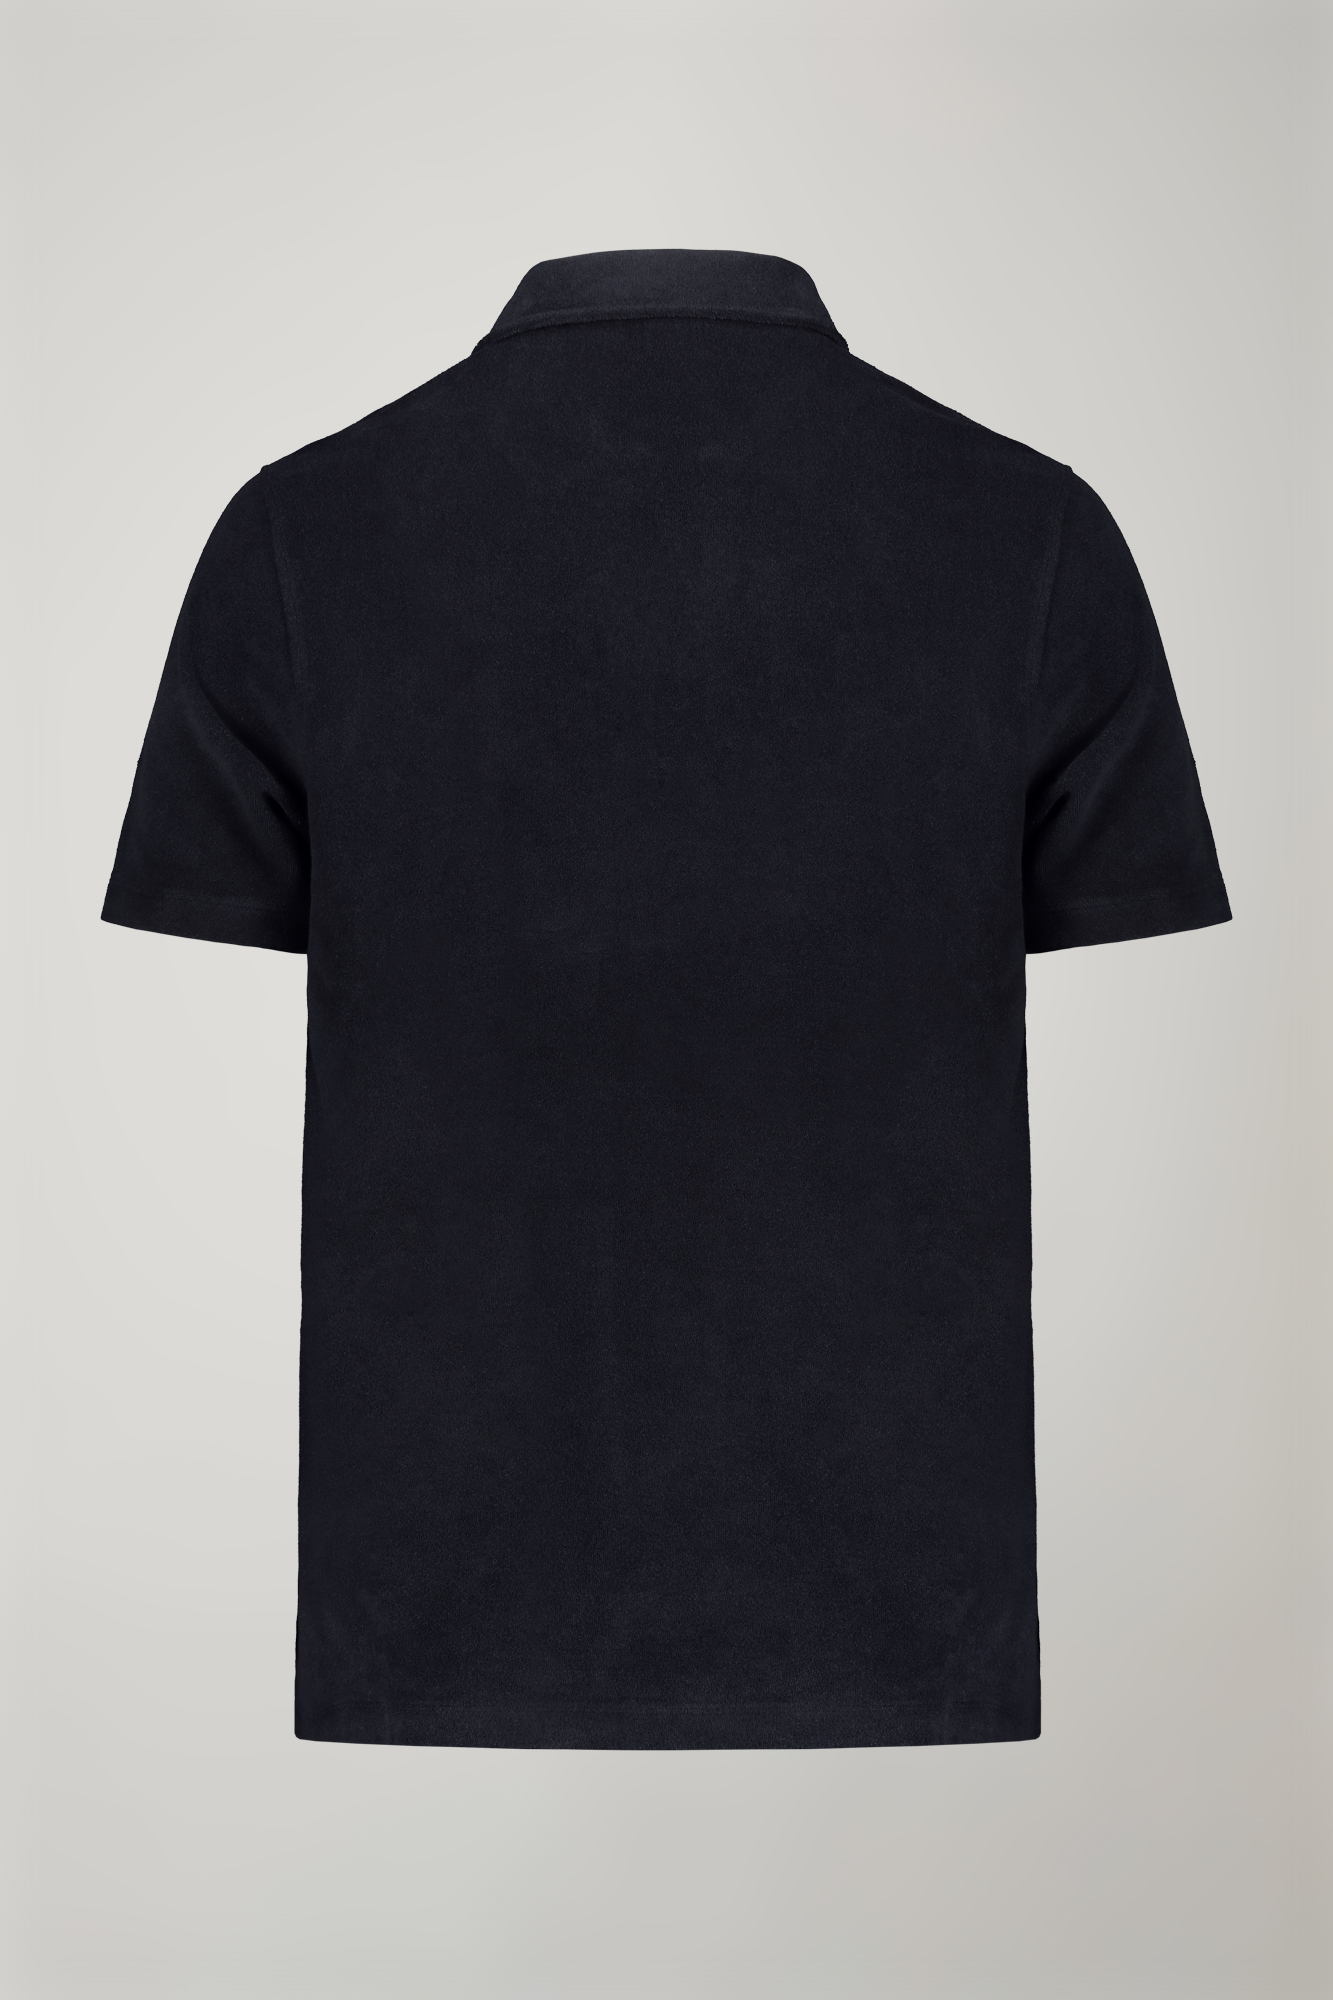 Kurzärmeliges Herren-Poloshirt mit Derby-Kragen aus Frottee in normaler Passform image number null